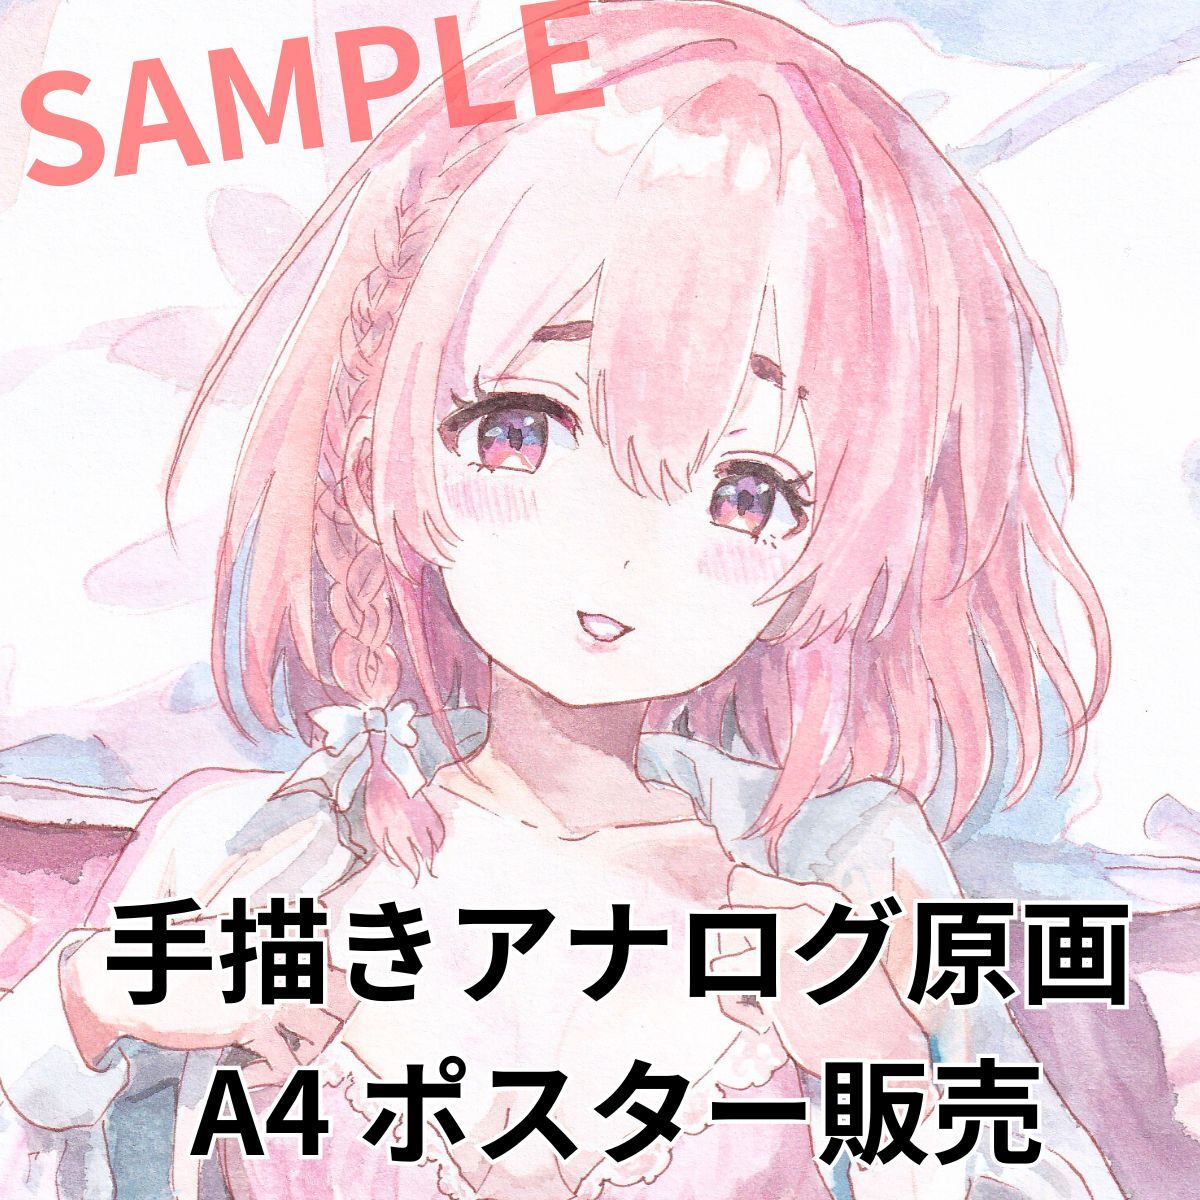 A4 poster hand-drawn illustrations she,... does Sakura .... .. Len kano anime same person 2404134